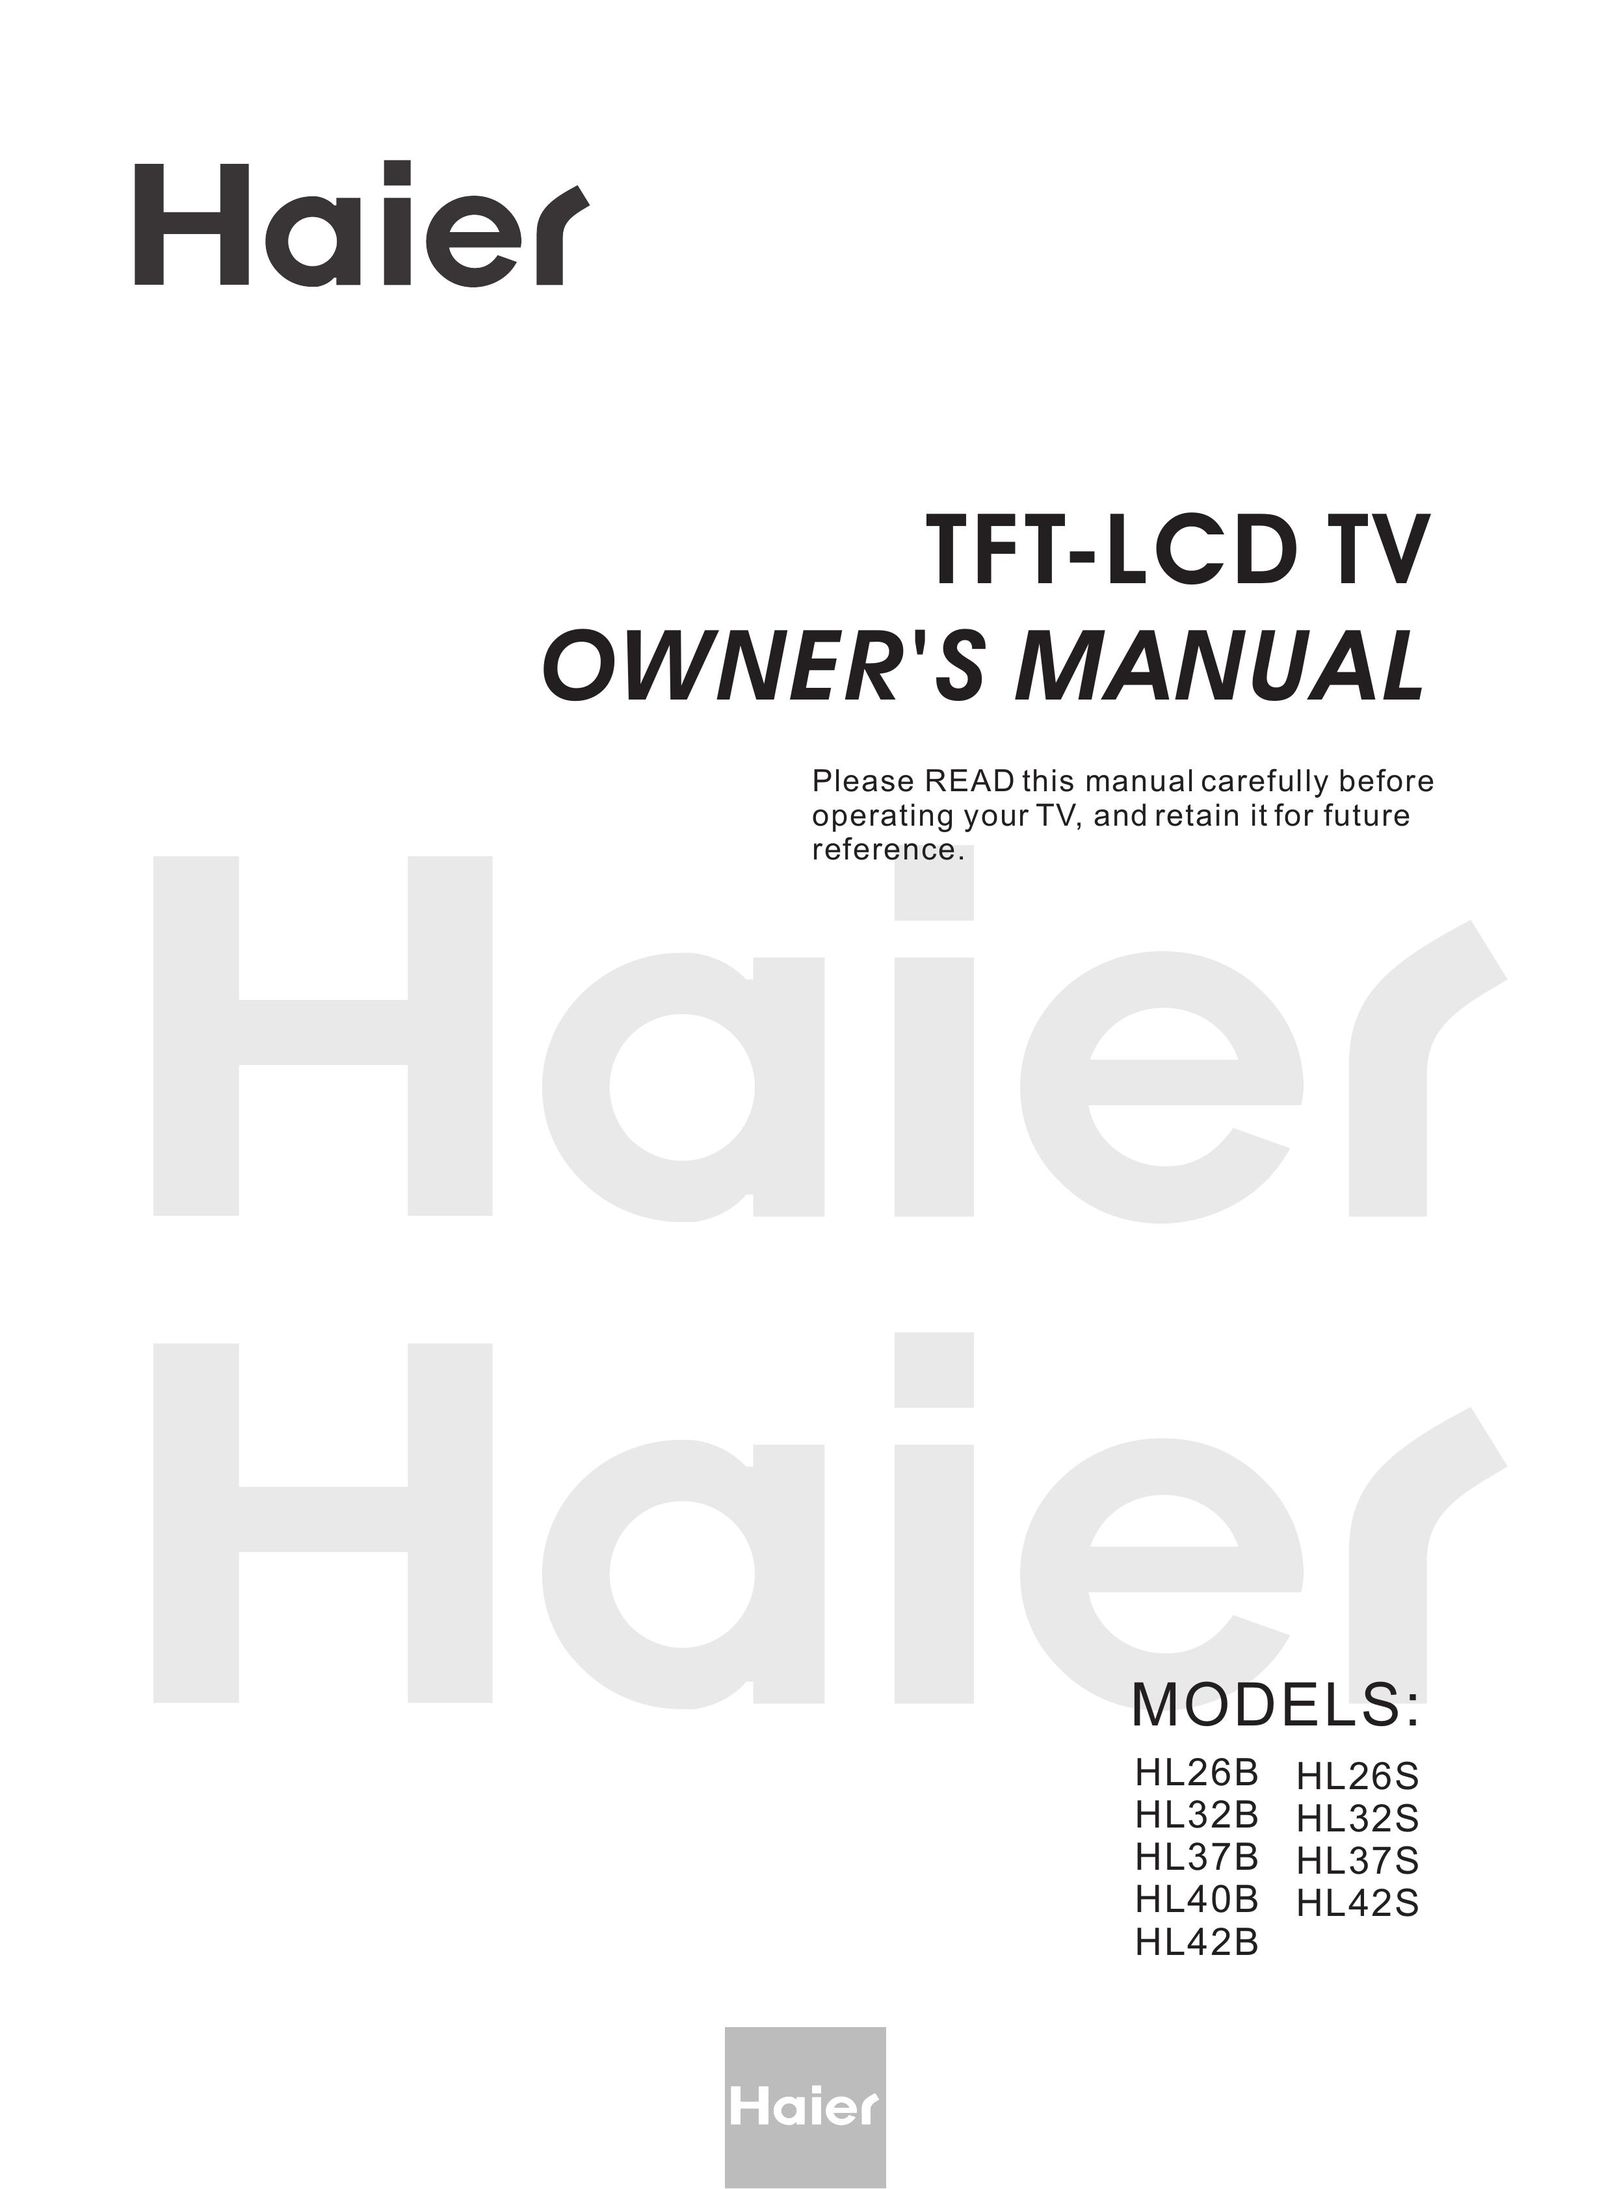 Haier HL26B Flat Panel Television User Manual